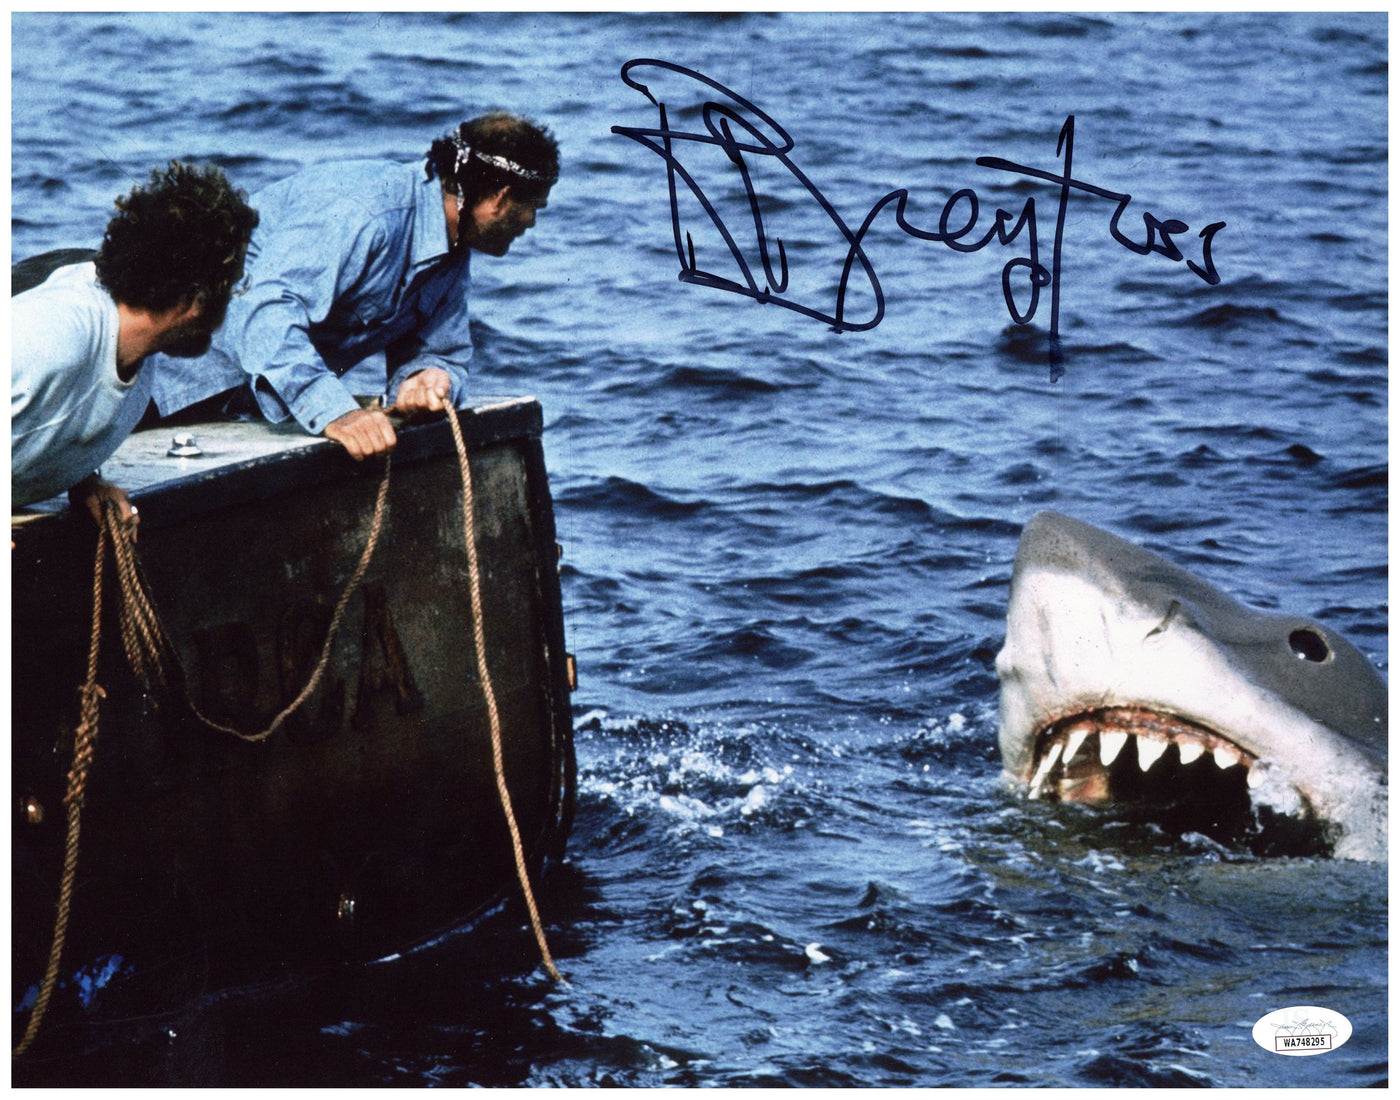 Richard Dreyfuss Autograph Signed 11x14 Photo Jaws JSA COA